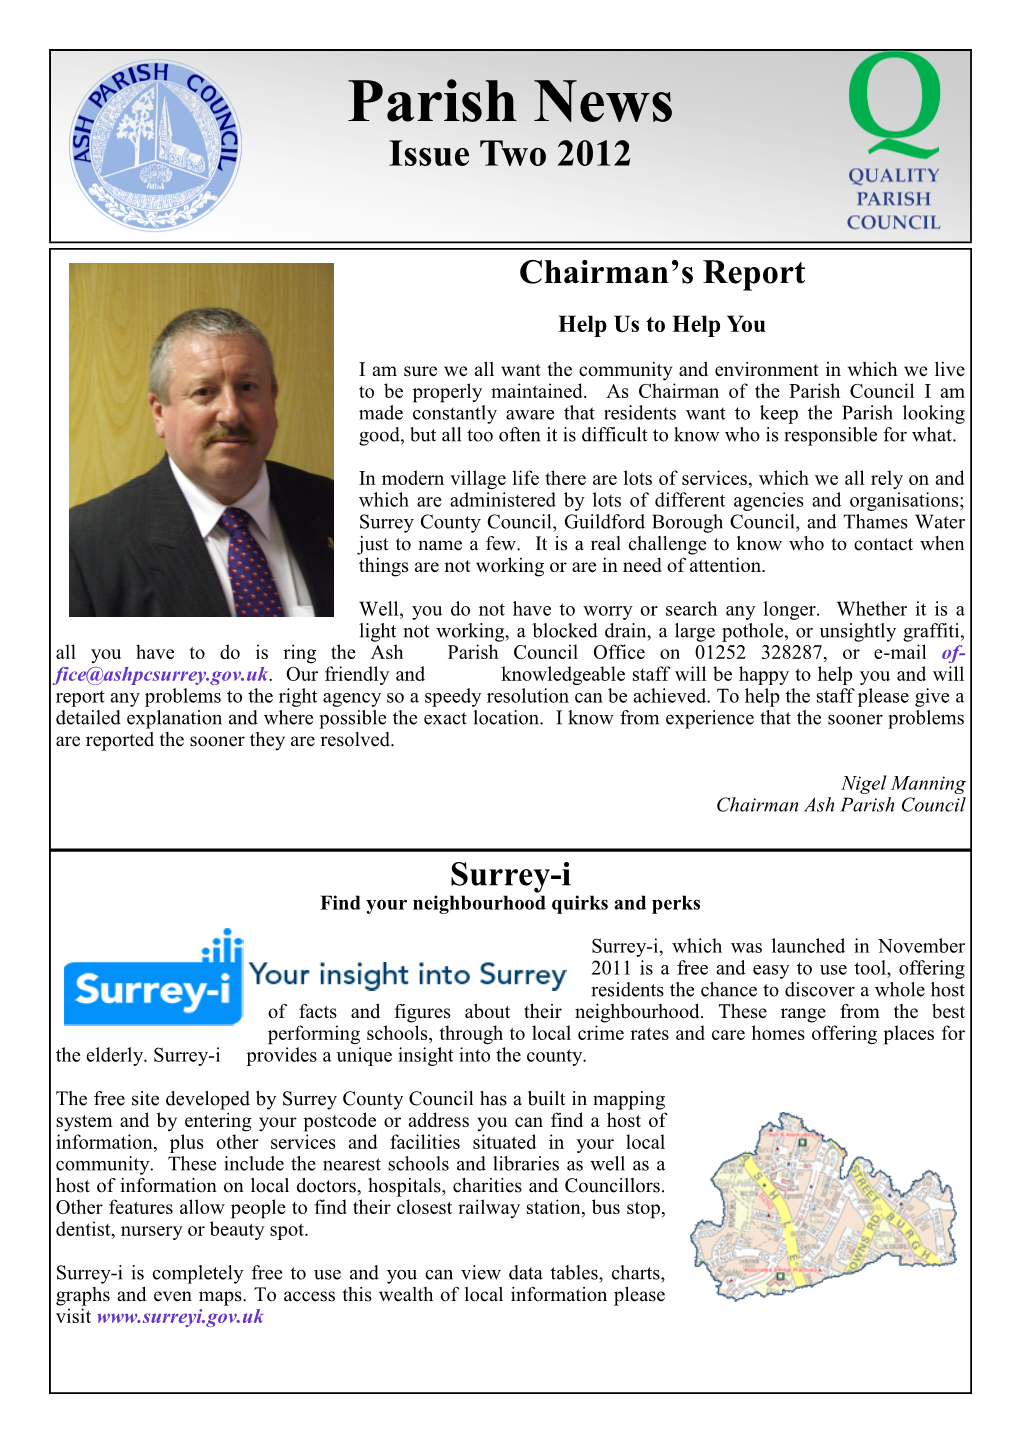 Parish News Issue Two 2012